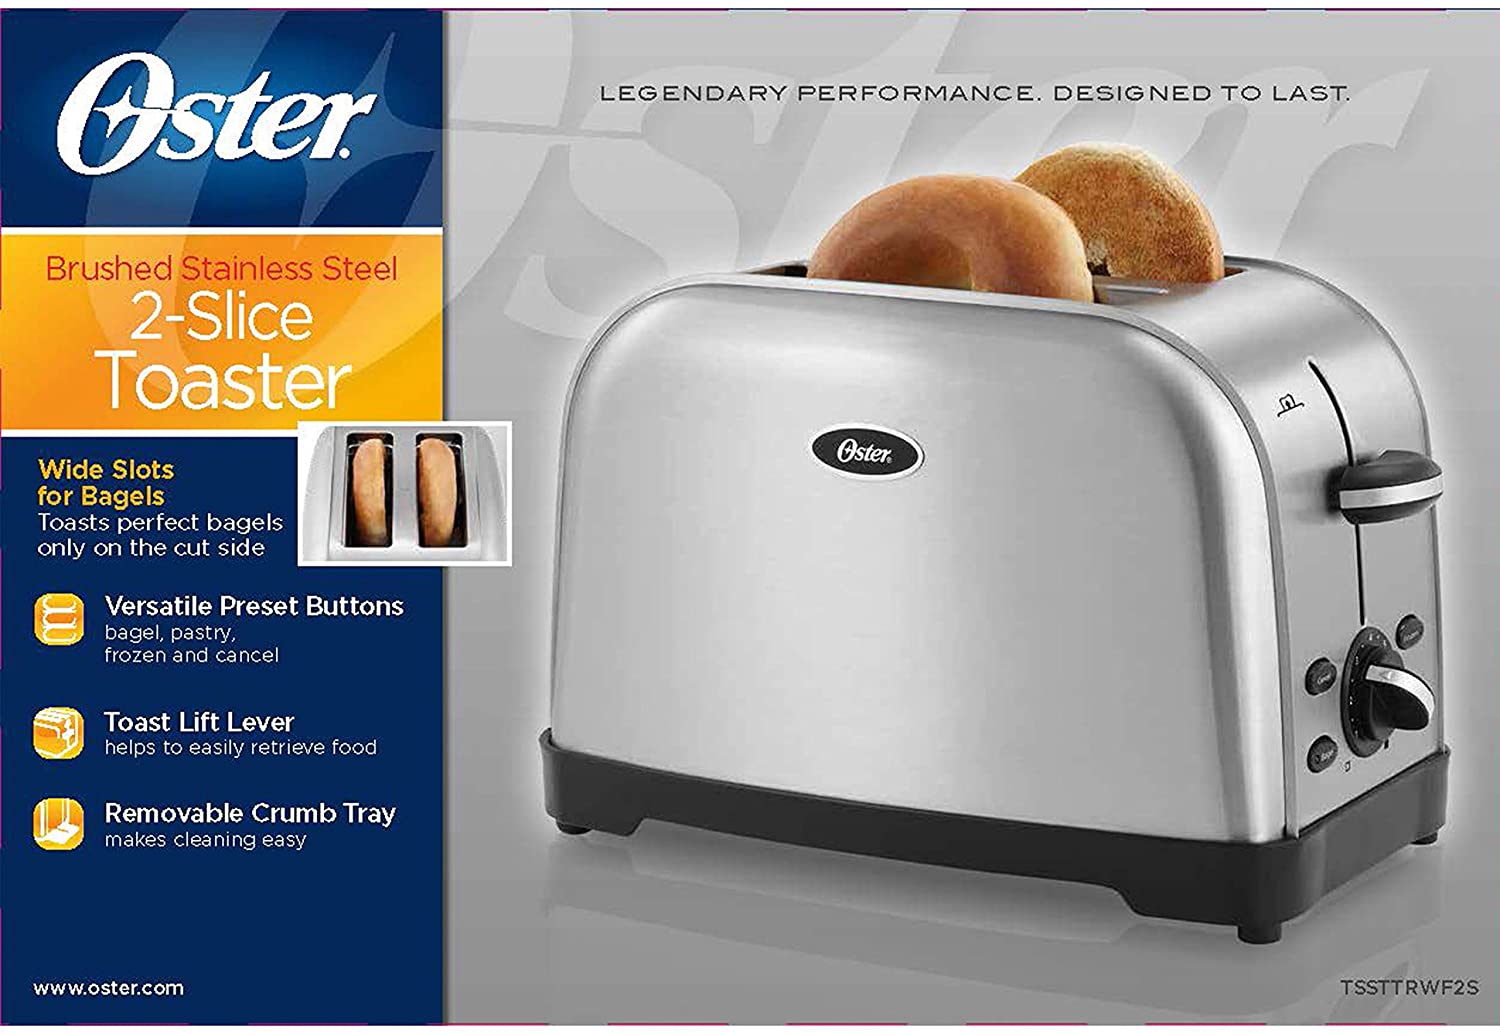 Oster: Legendary Kitchen Appliances Designed to Last